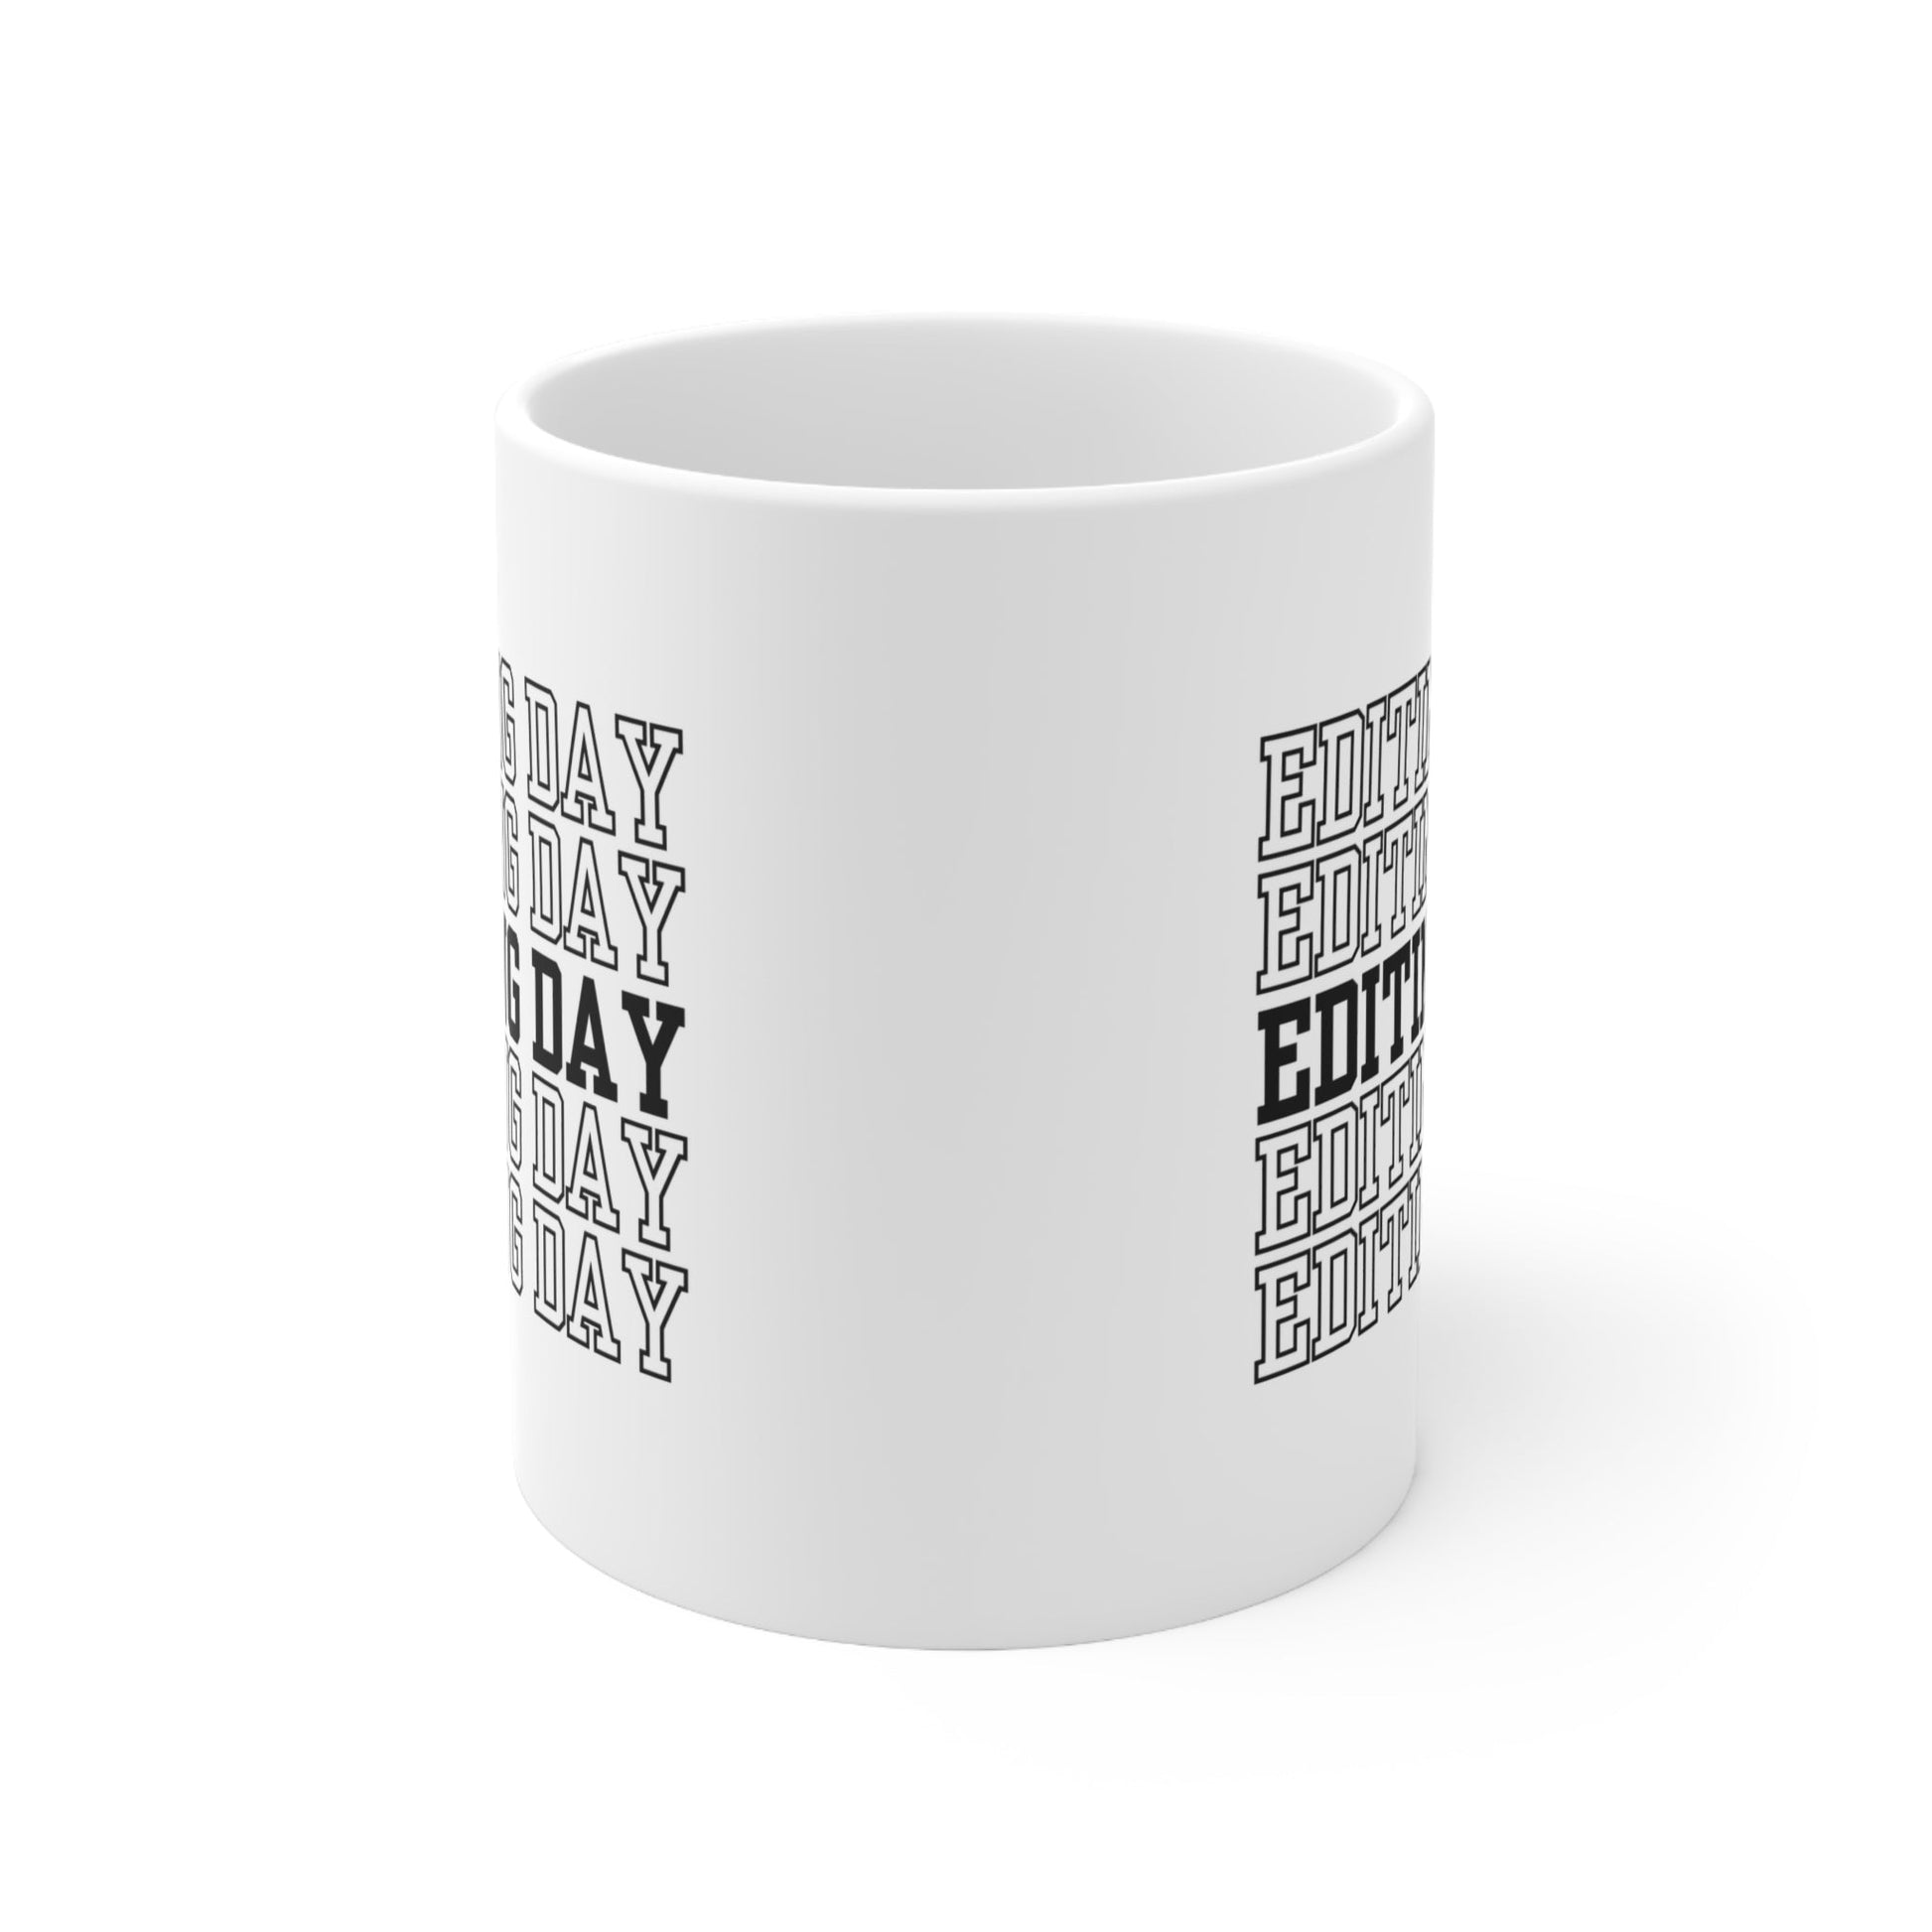 Editing Day Ceramic Mug-Mug-Printify-11oz-Olive Grove Coffee-ceramic coffee mugs-Modern mugs- Funky mugs- Funny mugs- Trendy mugs- Artistic mugs